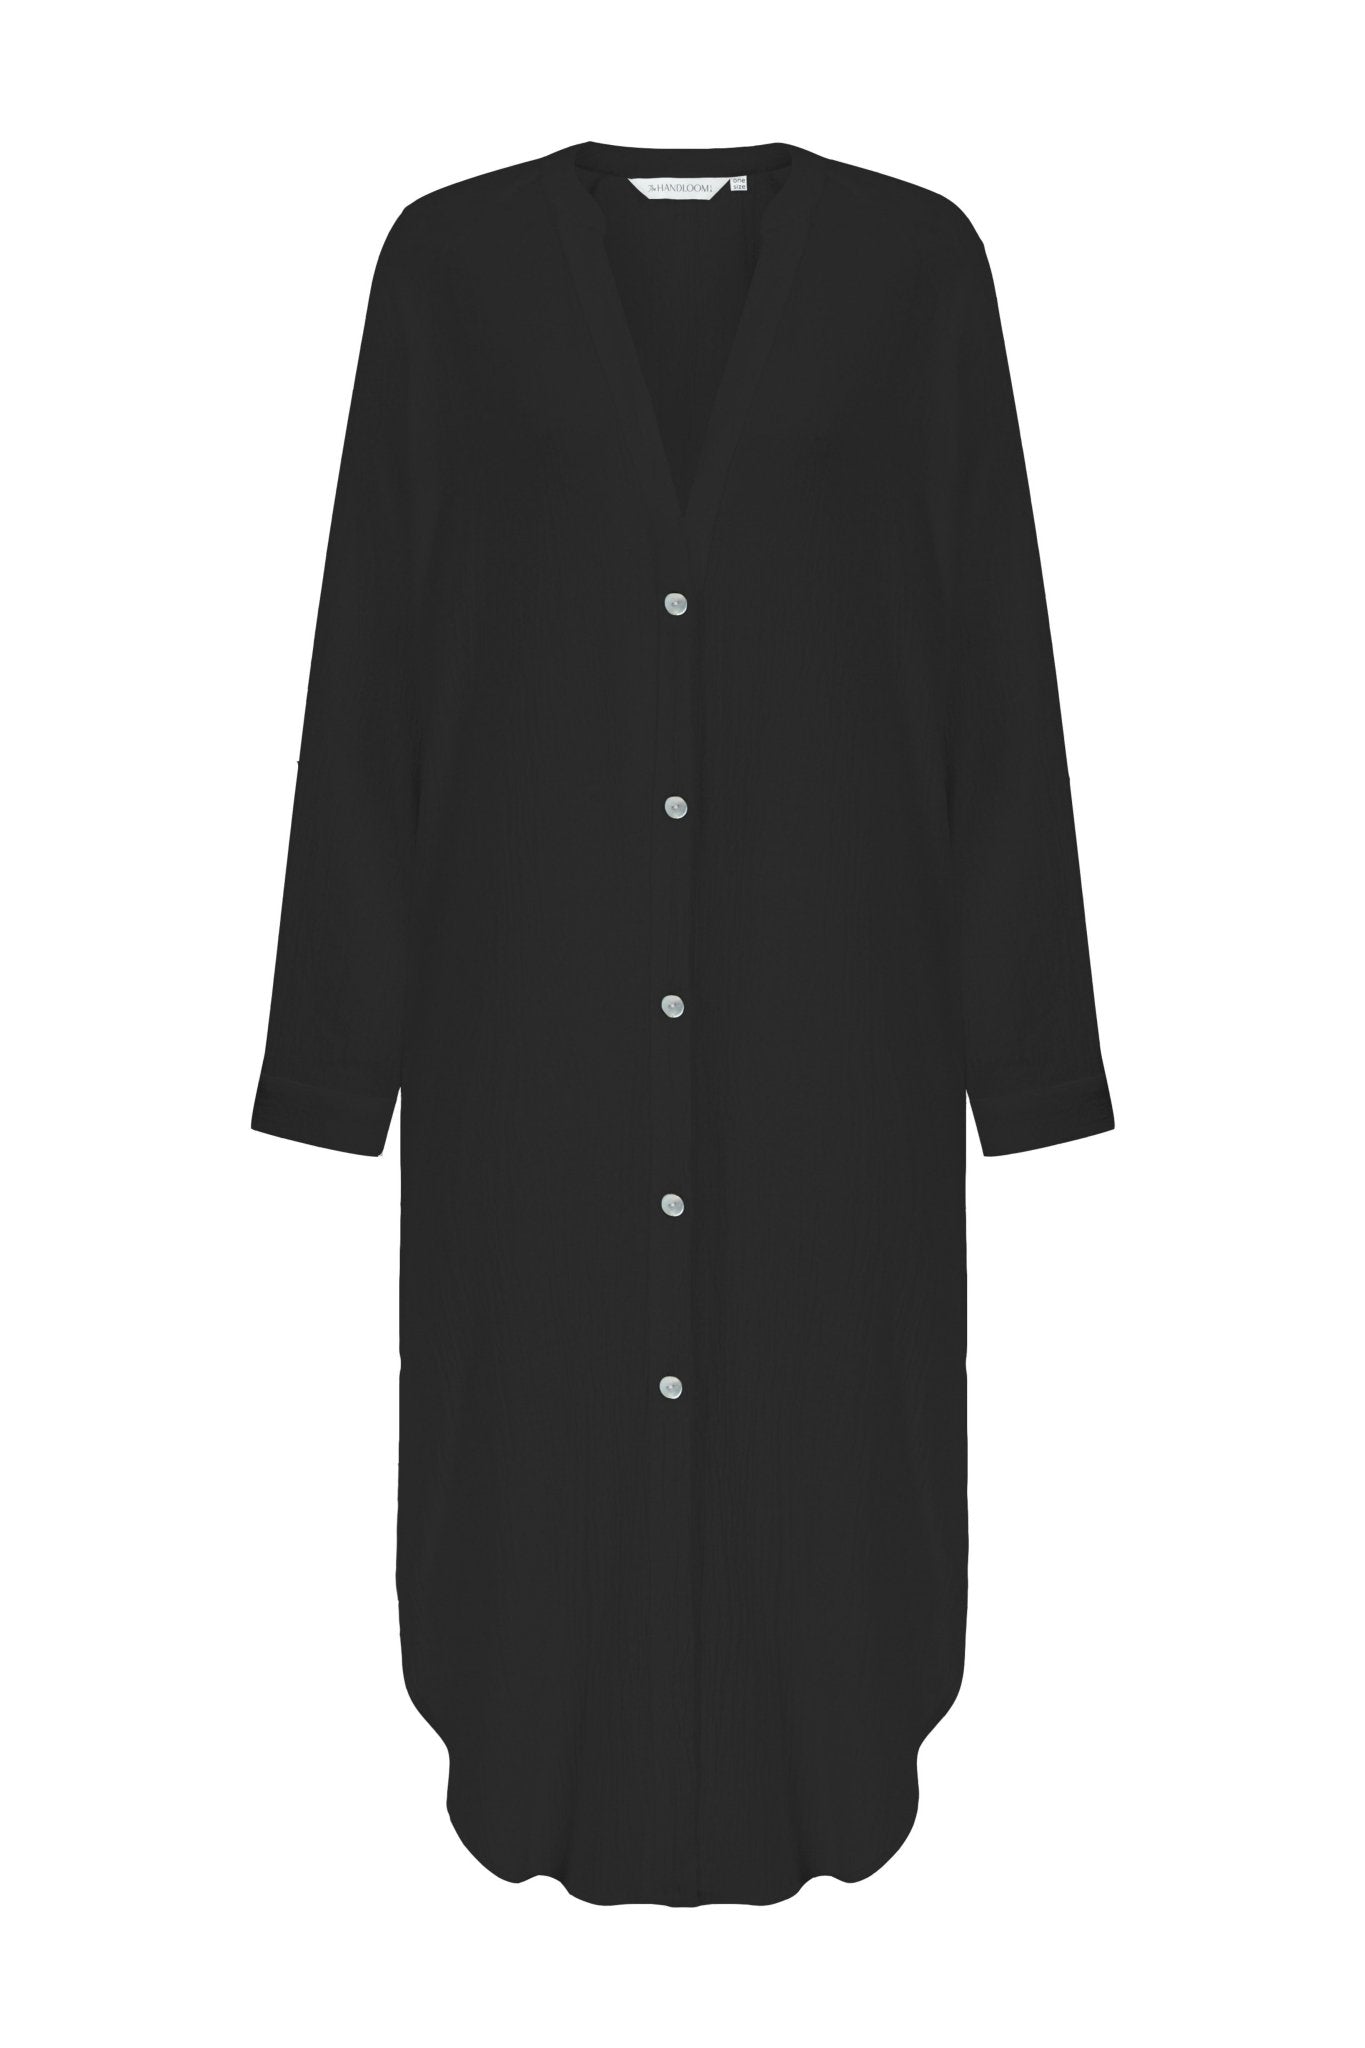 Terra Shirt Dress - Black by The Handloom